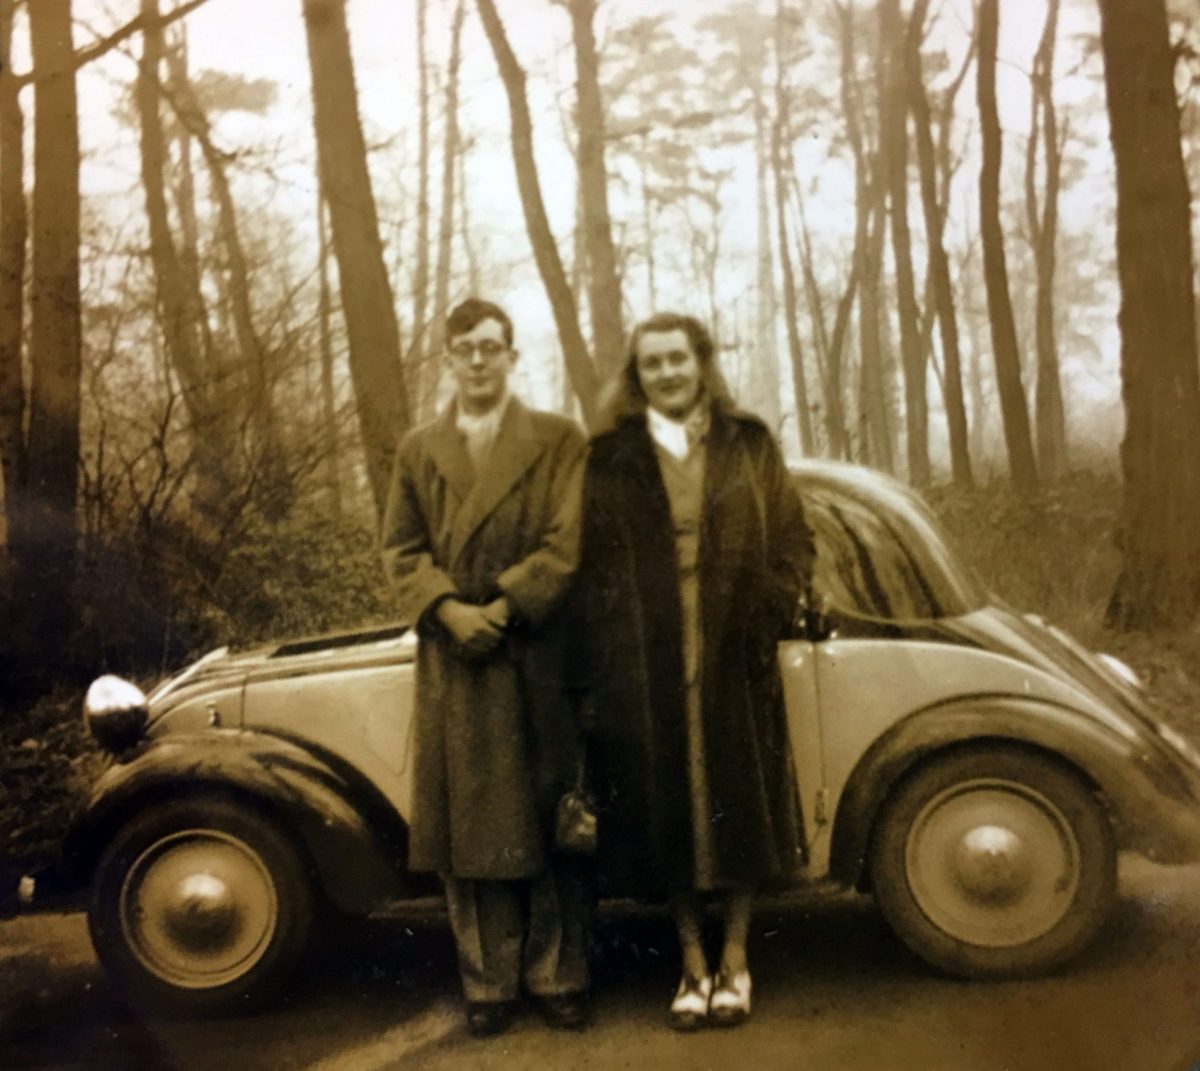 James and Caroline in their Citroën 2CV, in the Bois de Boulogne, Paris, ca 1949